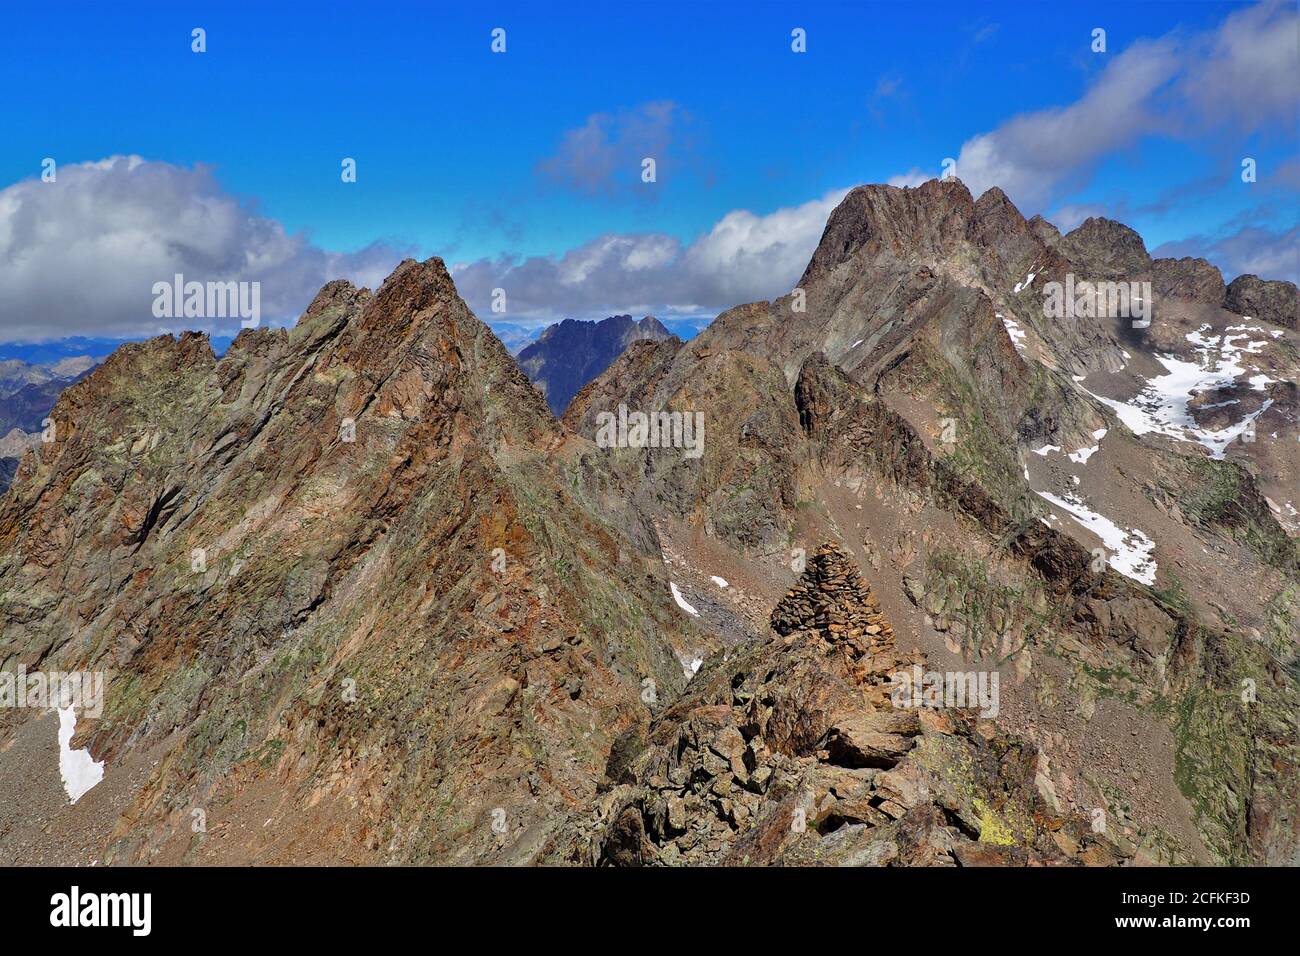 Scenic view of Argentera and Nasta summits in Alpi Marittime, Italy Stock Photo